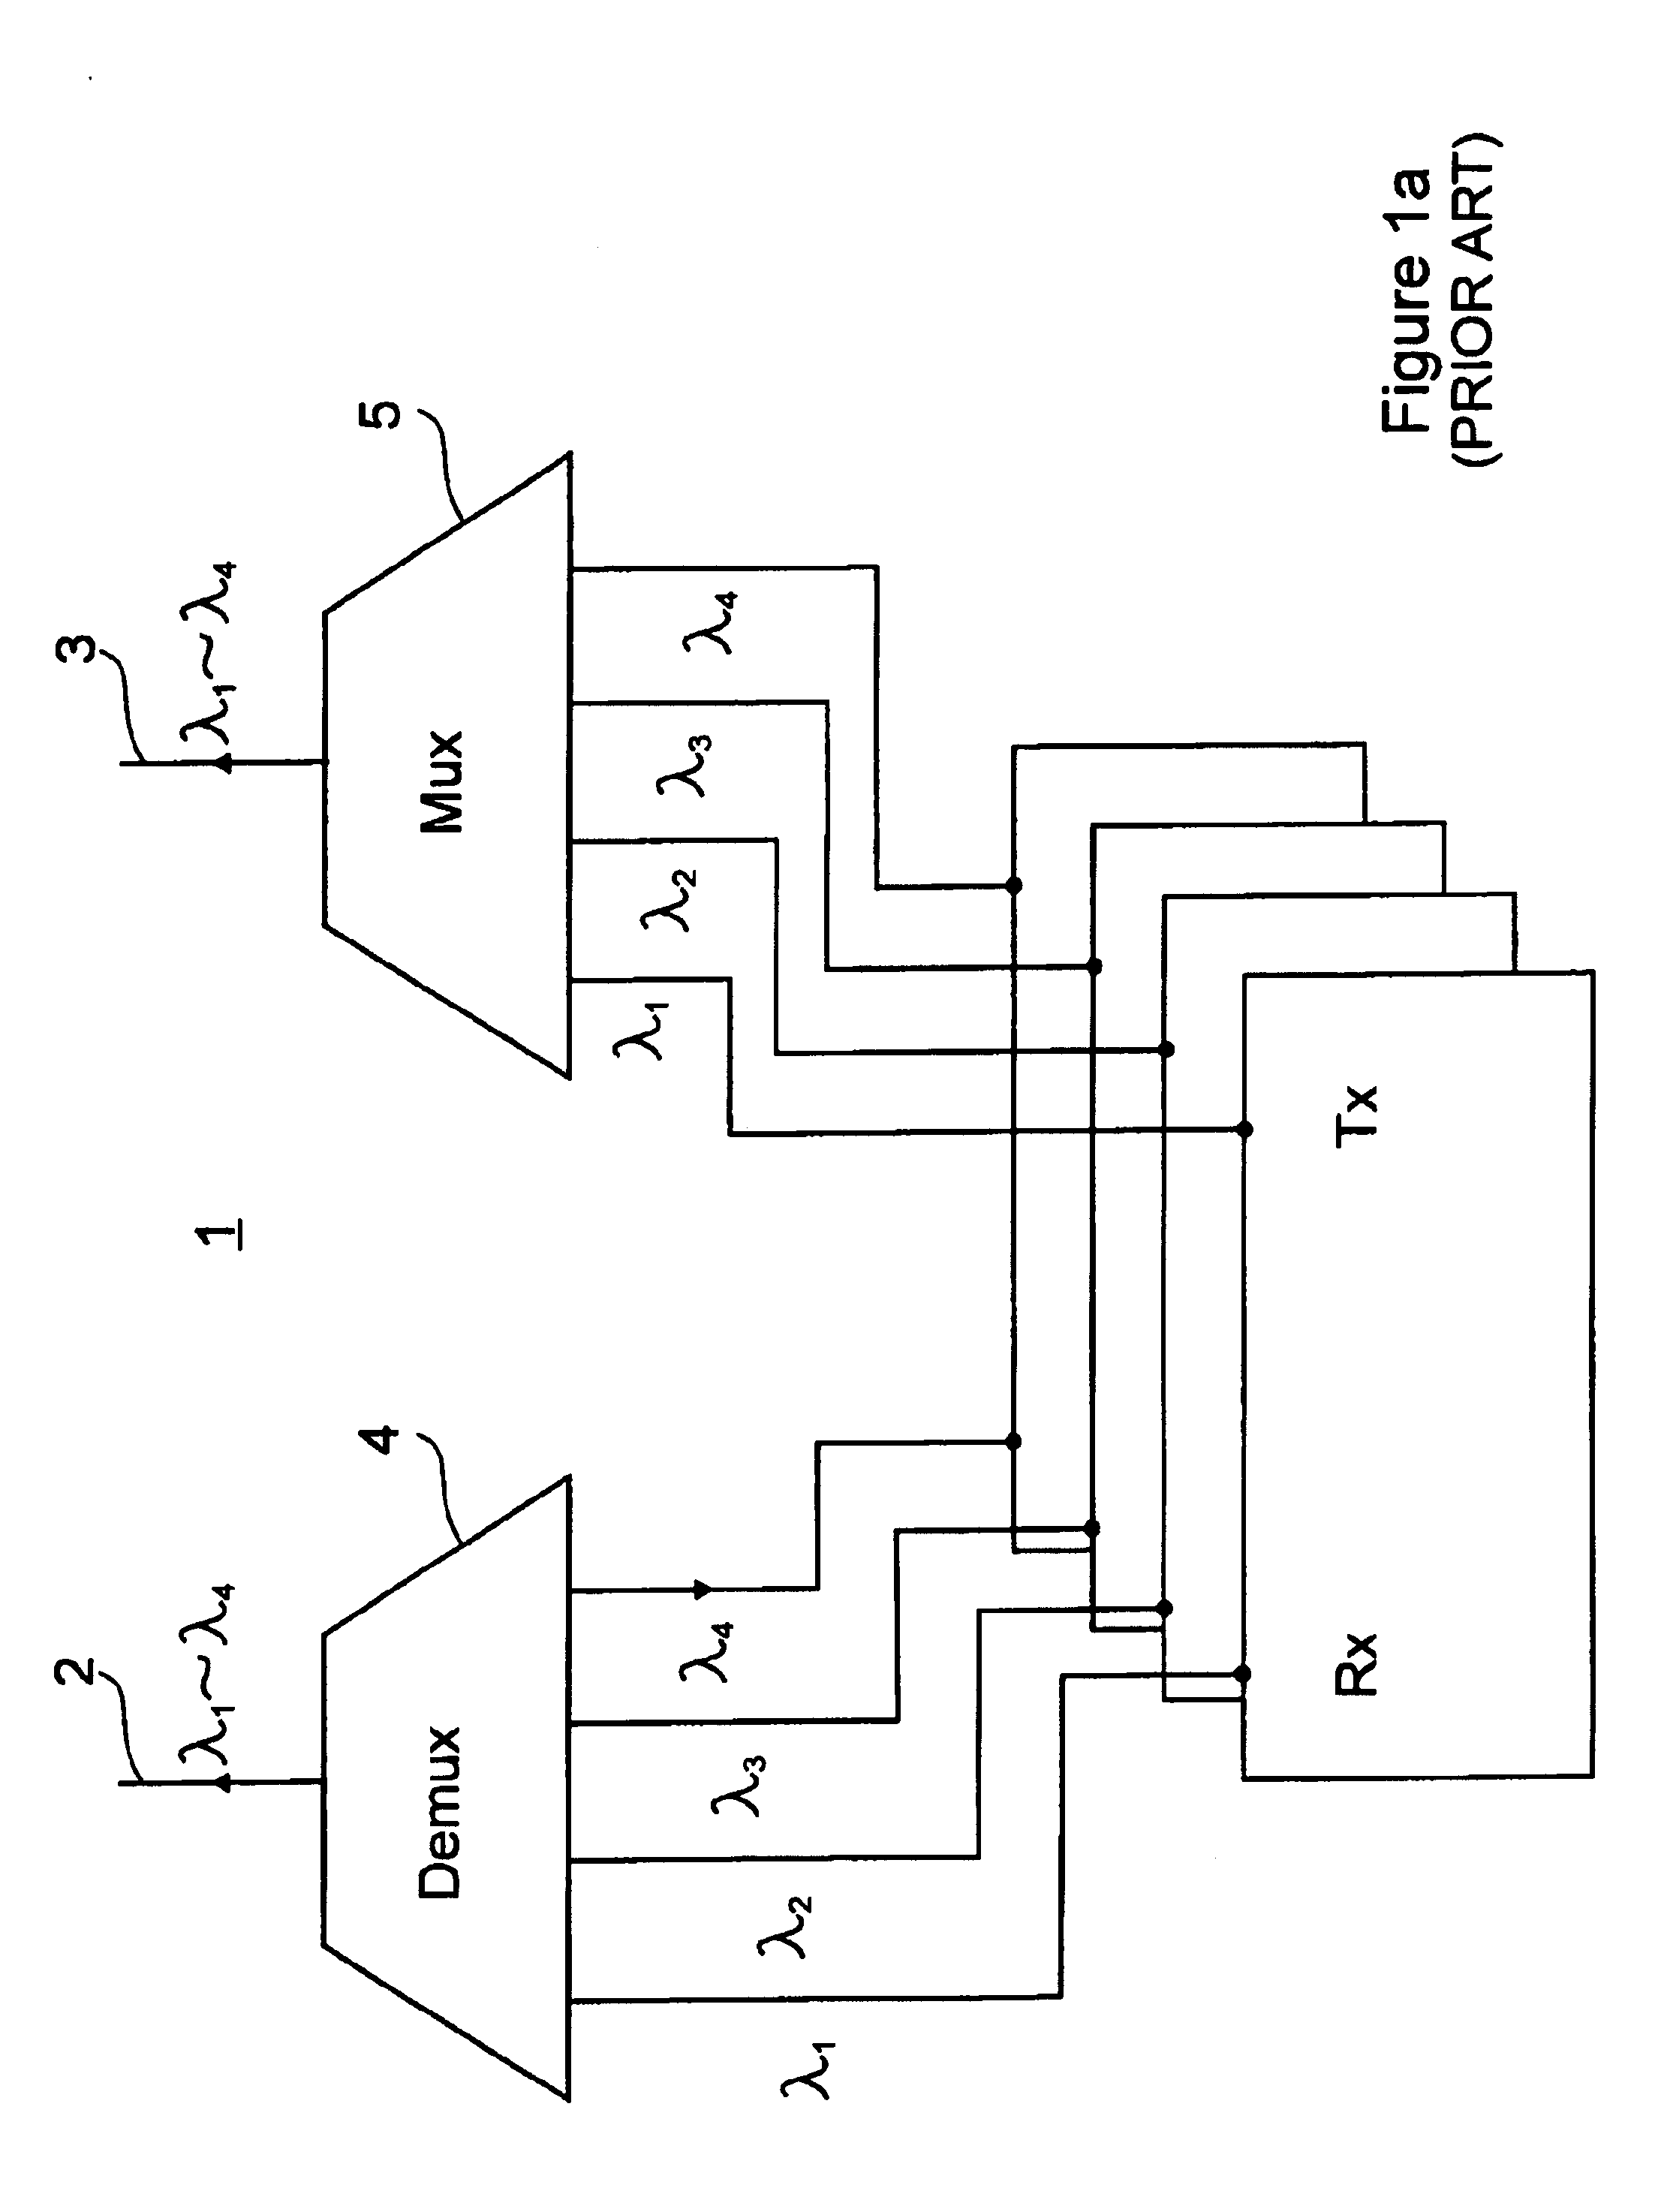 Bidirectional multiplexer and demultiplexer based on a single echelle waveguide grating